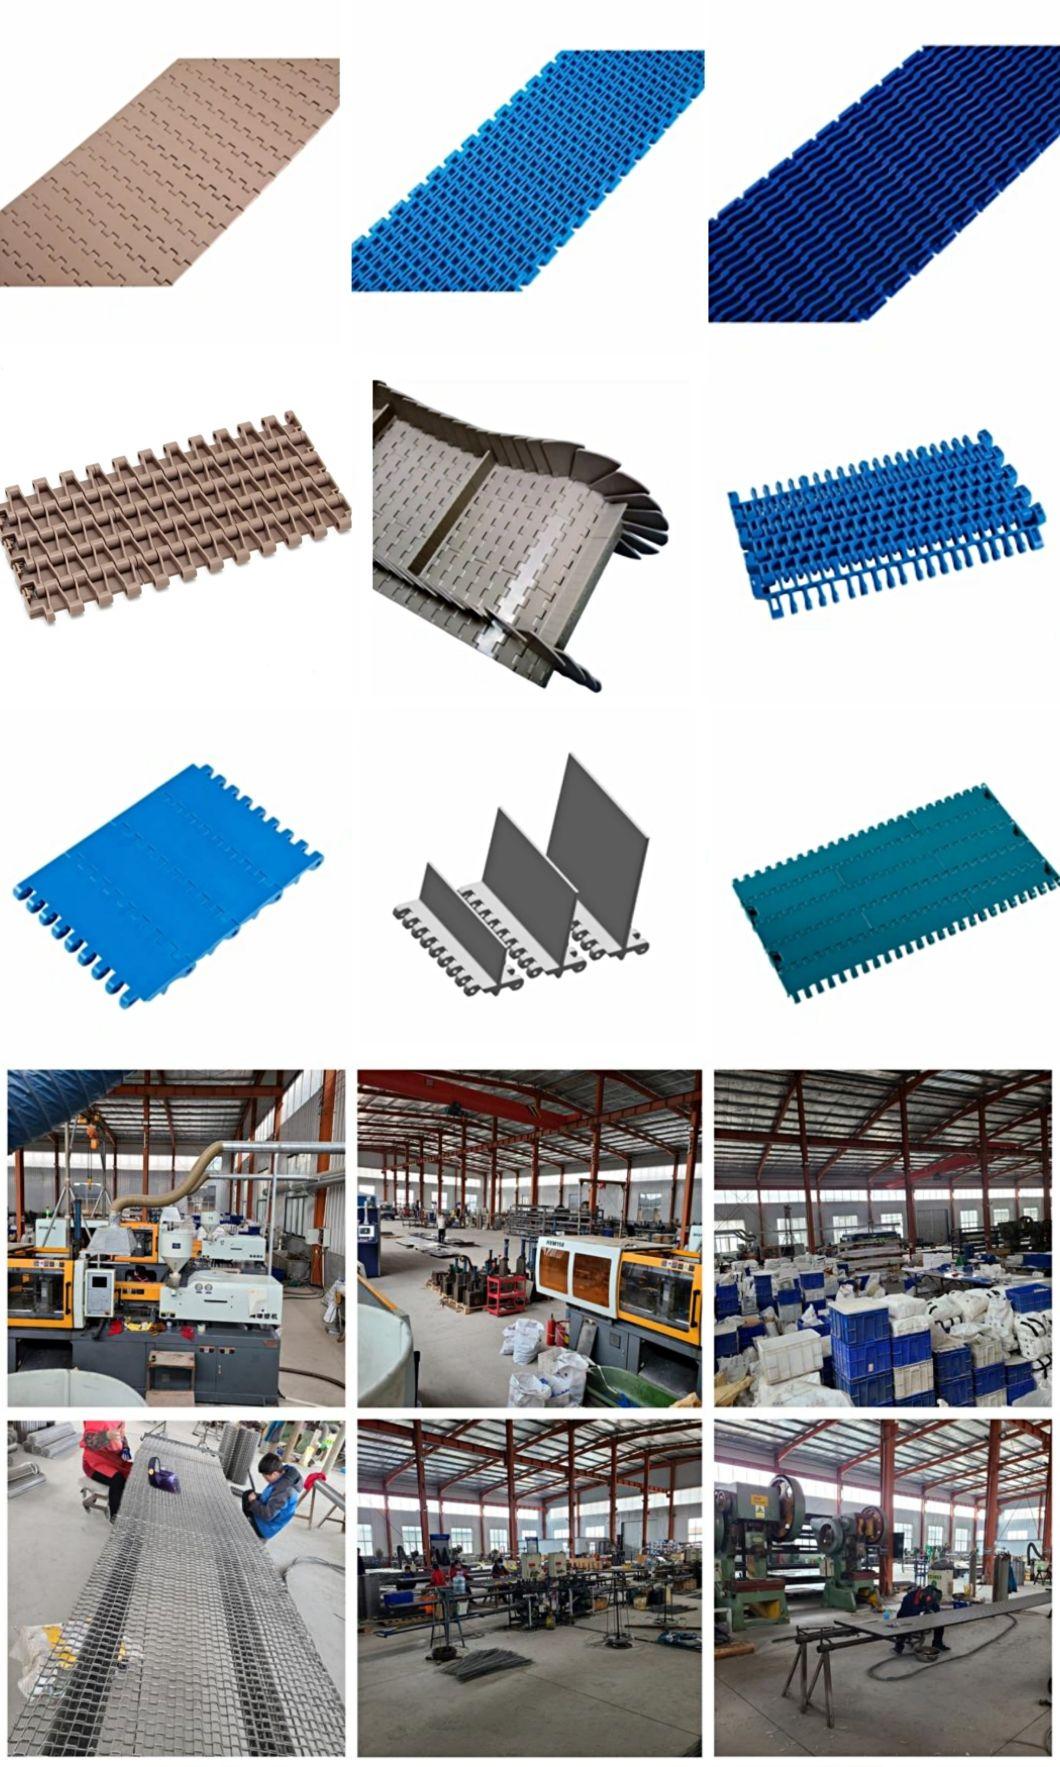 Heat Resistant Stainless Steel Conveyor Belt Wire Mesh Conveyor Belt for Food Plants, Food Industry